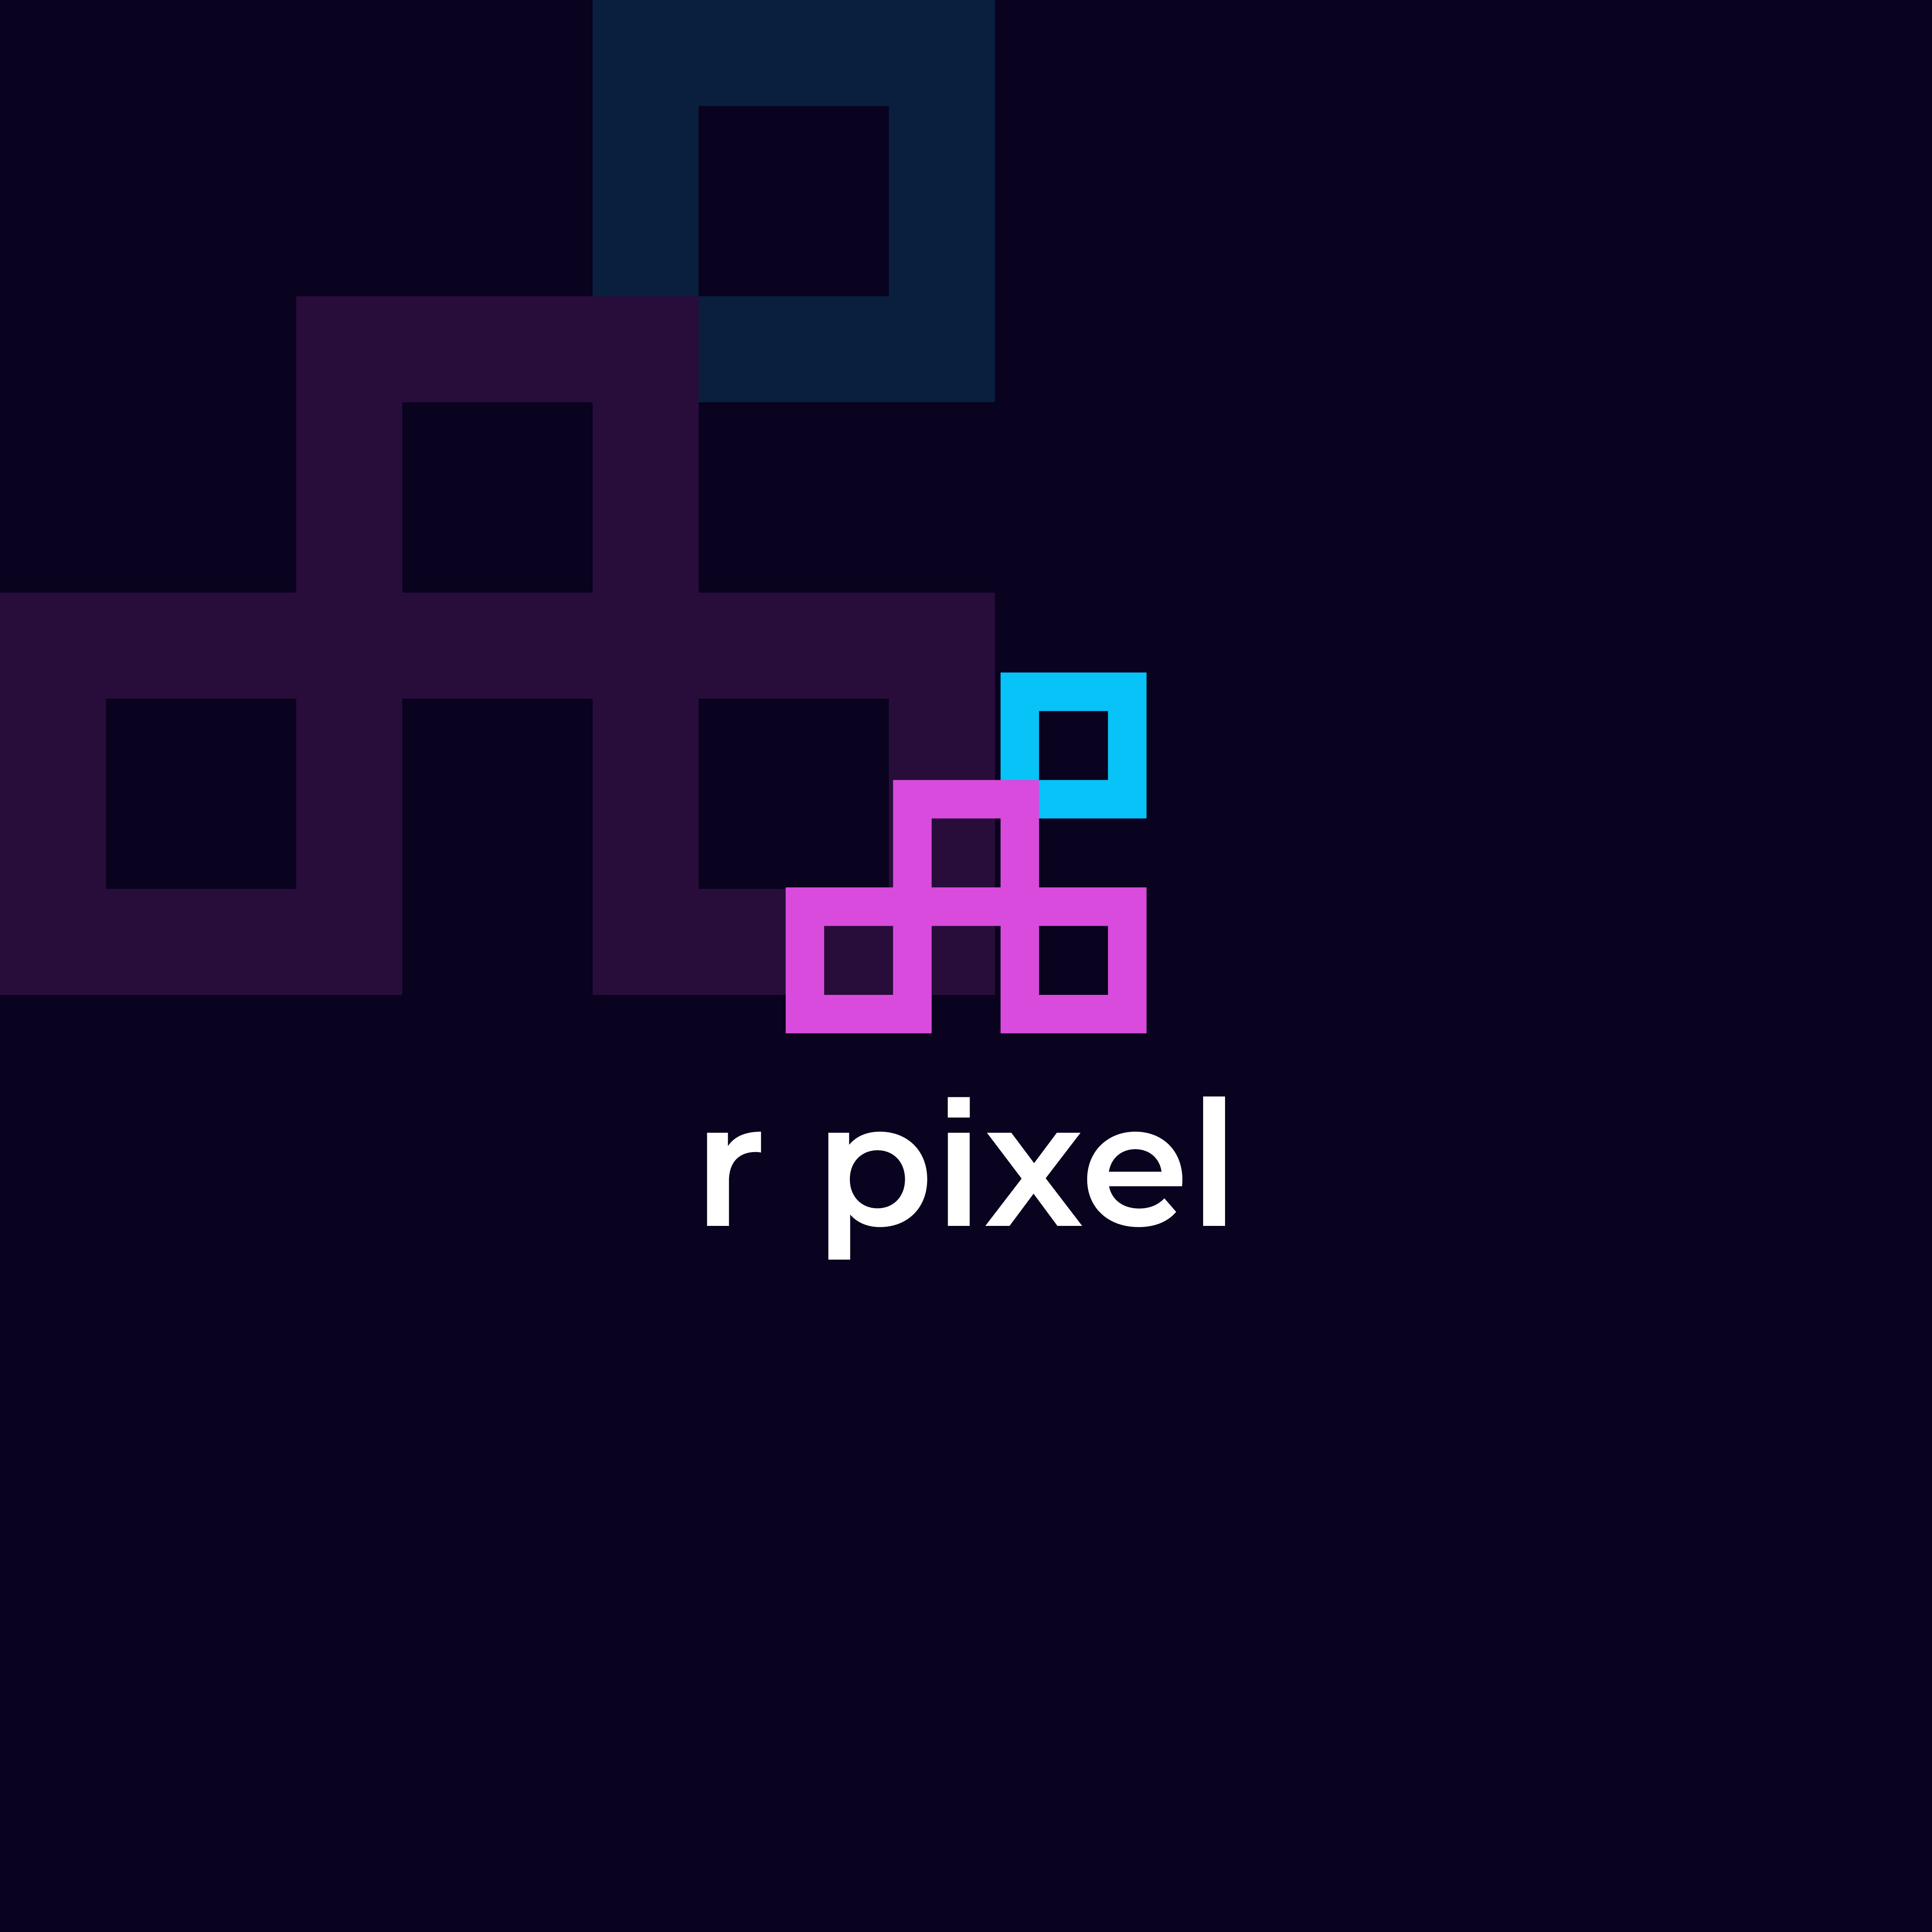 X pixel modern logo design concept Royalty Free Vector Image